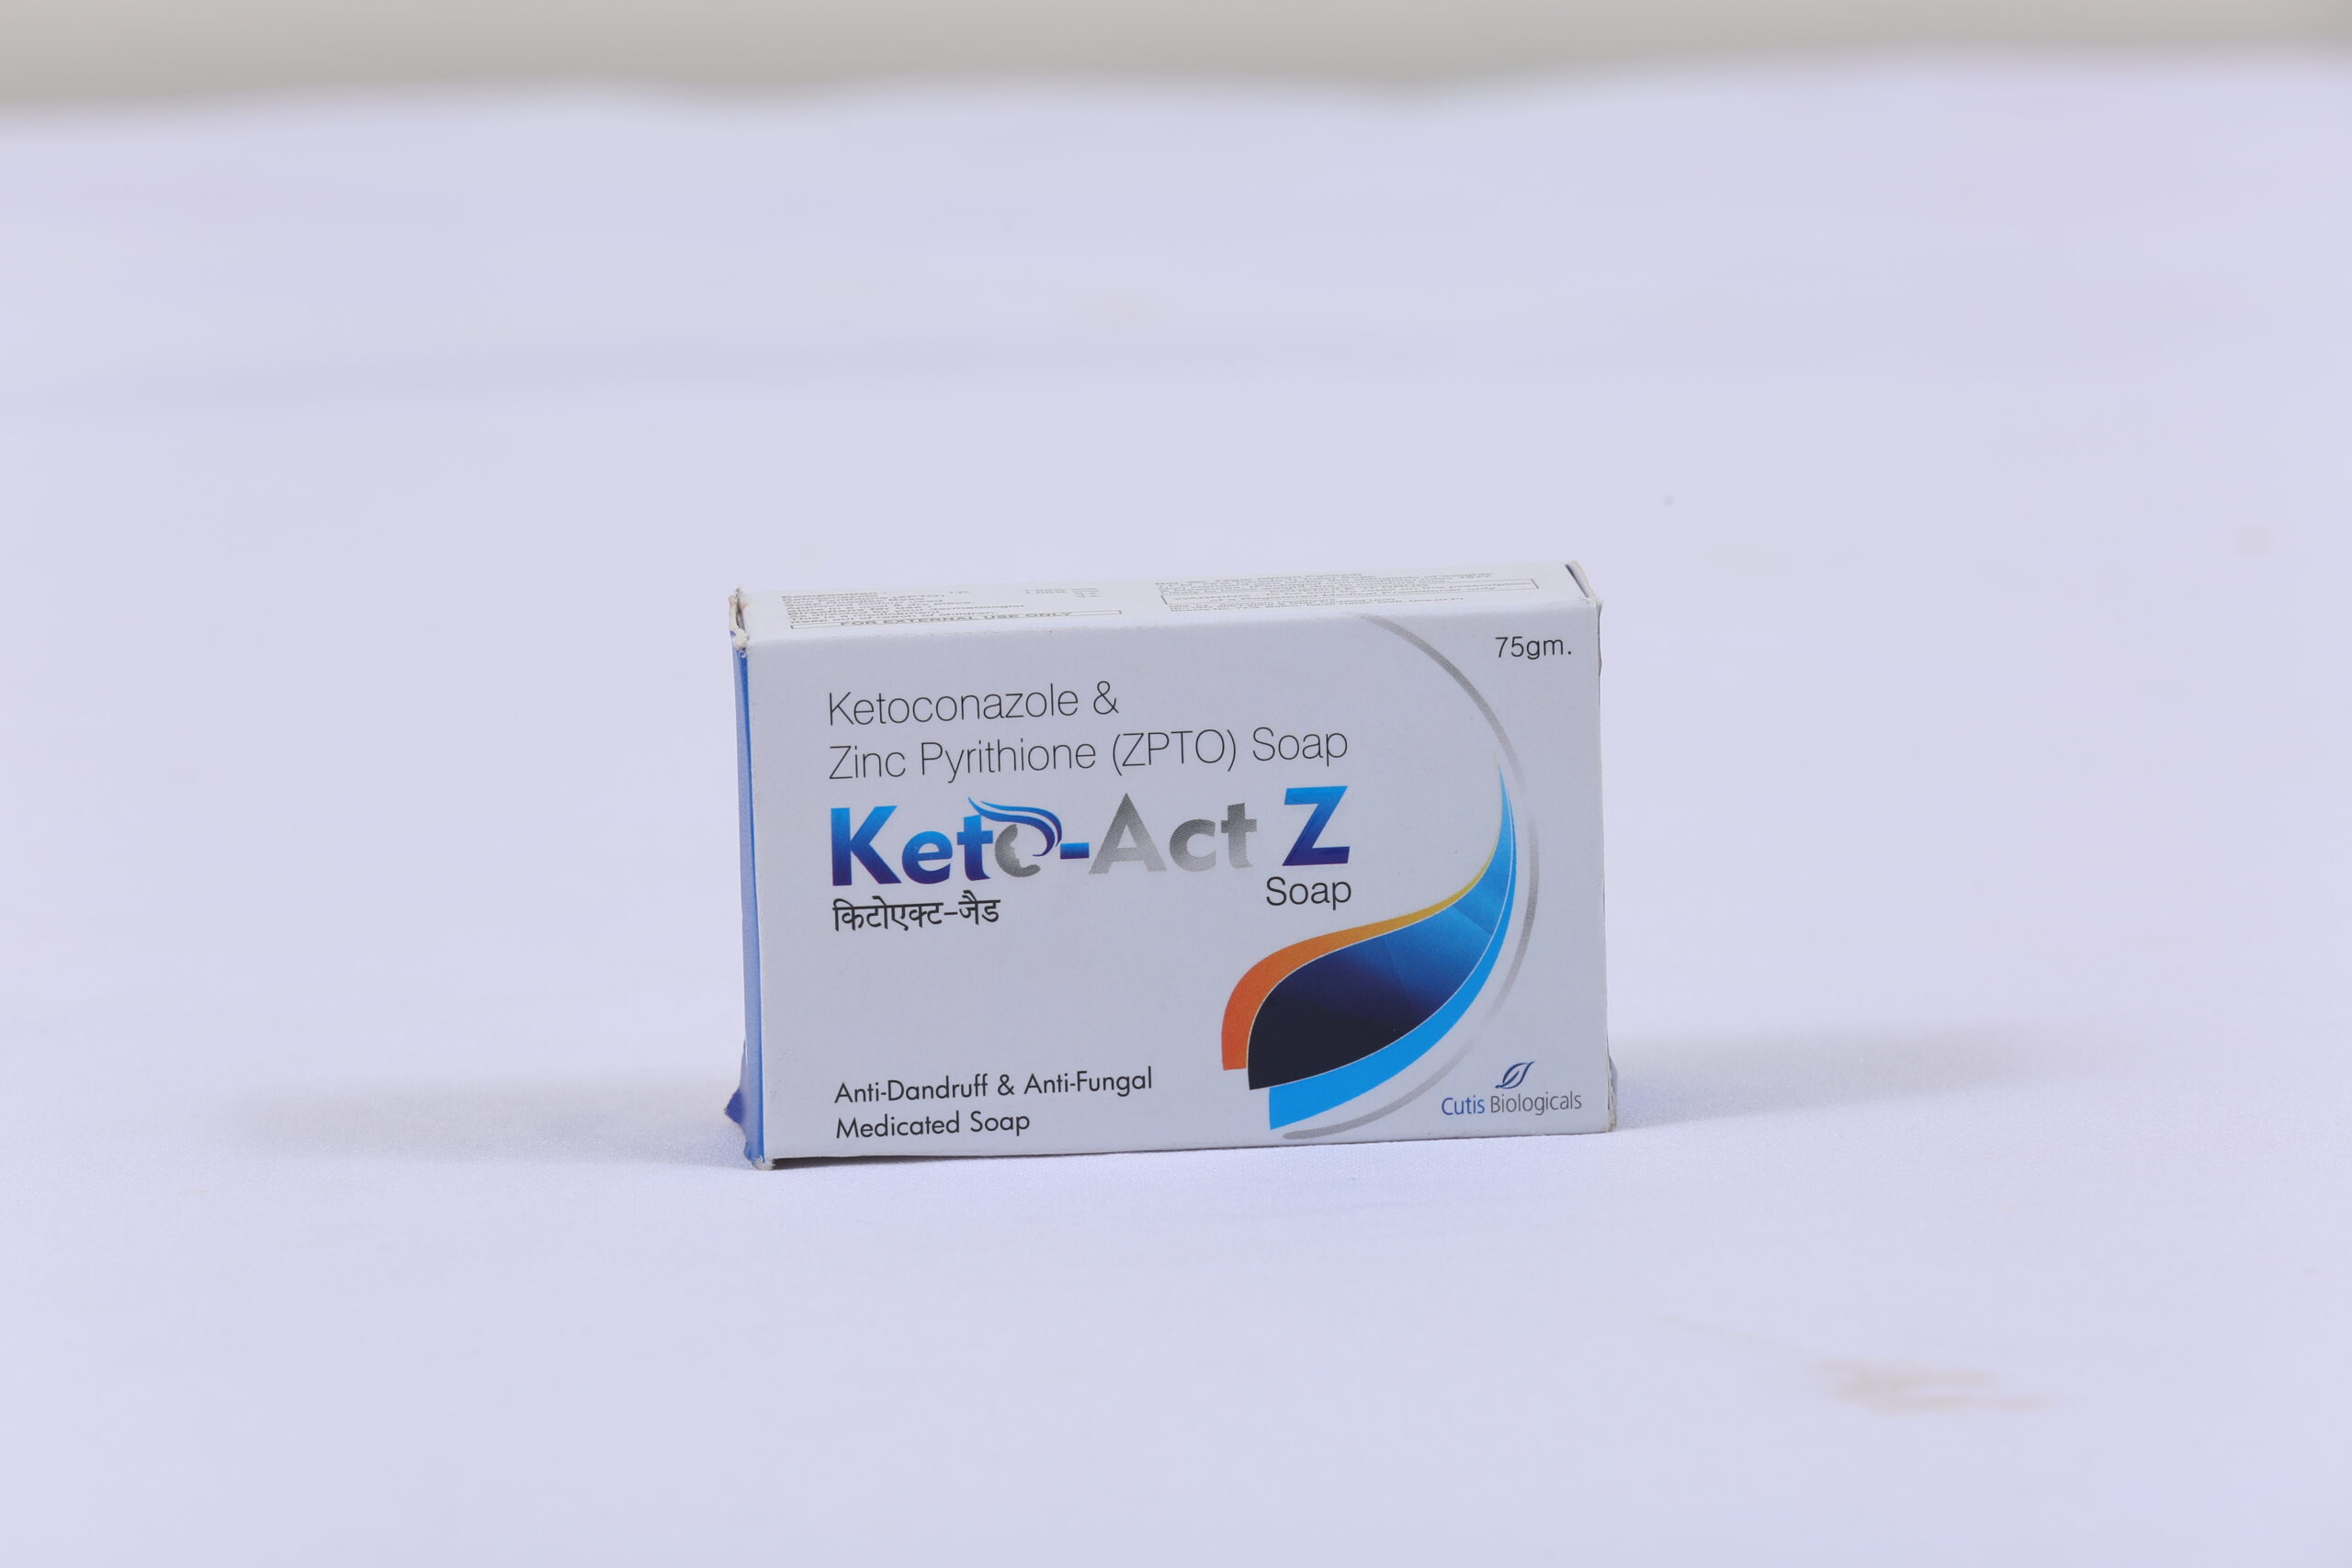 KETO-ACT-Z (Ketoconazole 1 % +ZPTO 1%. Soap)